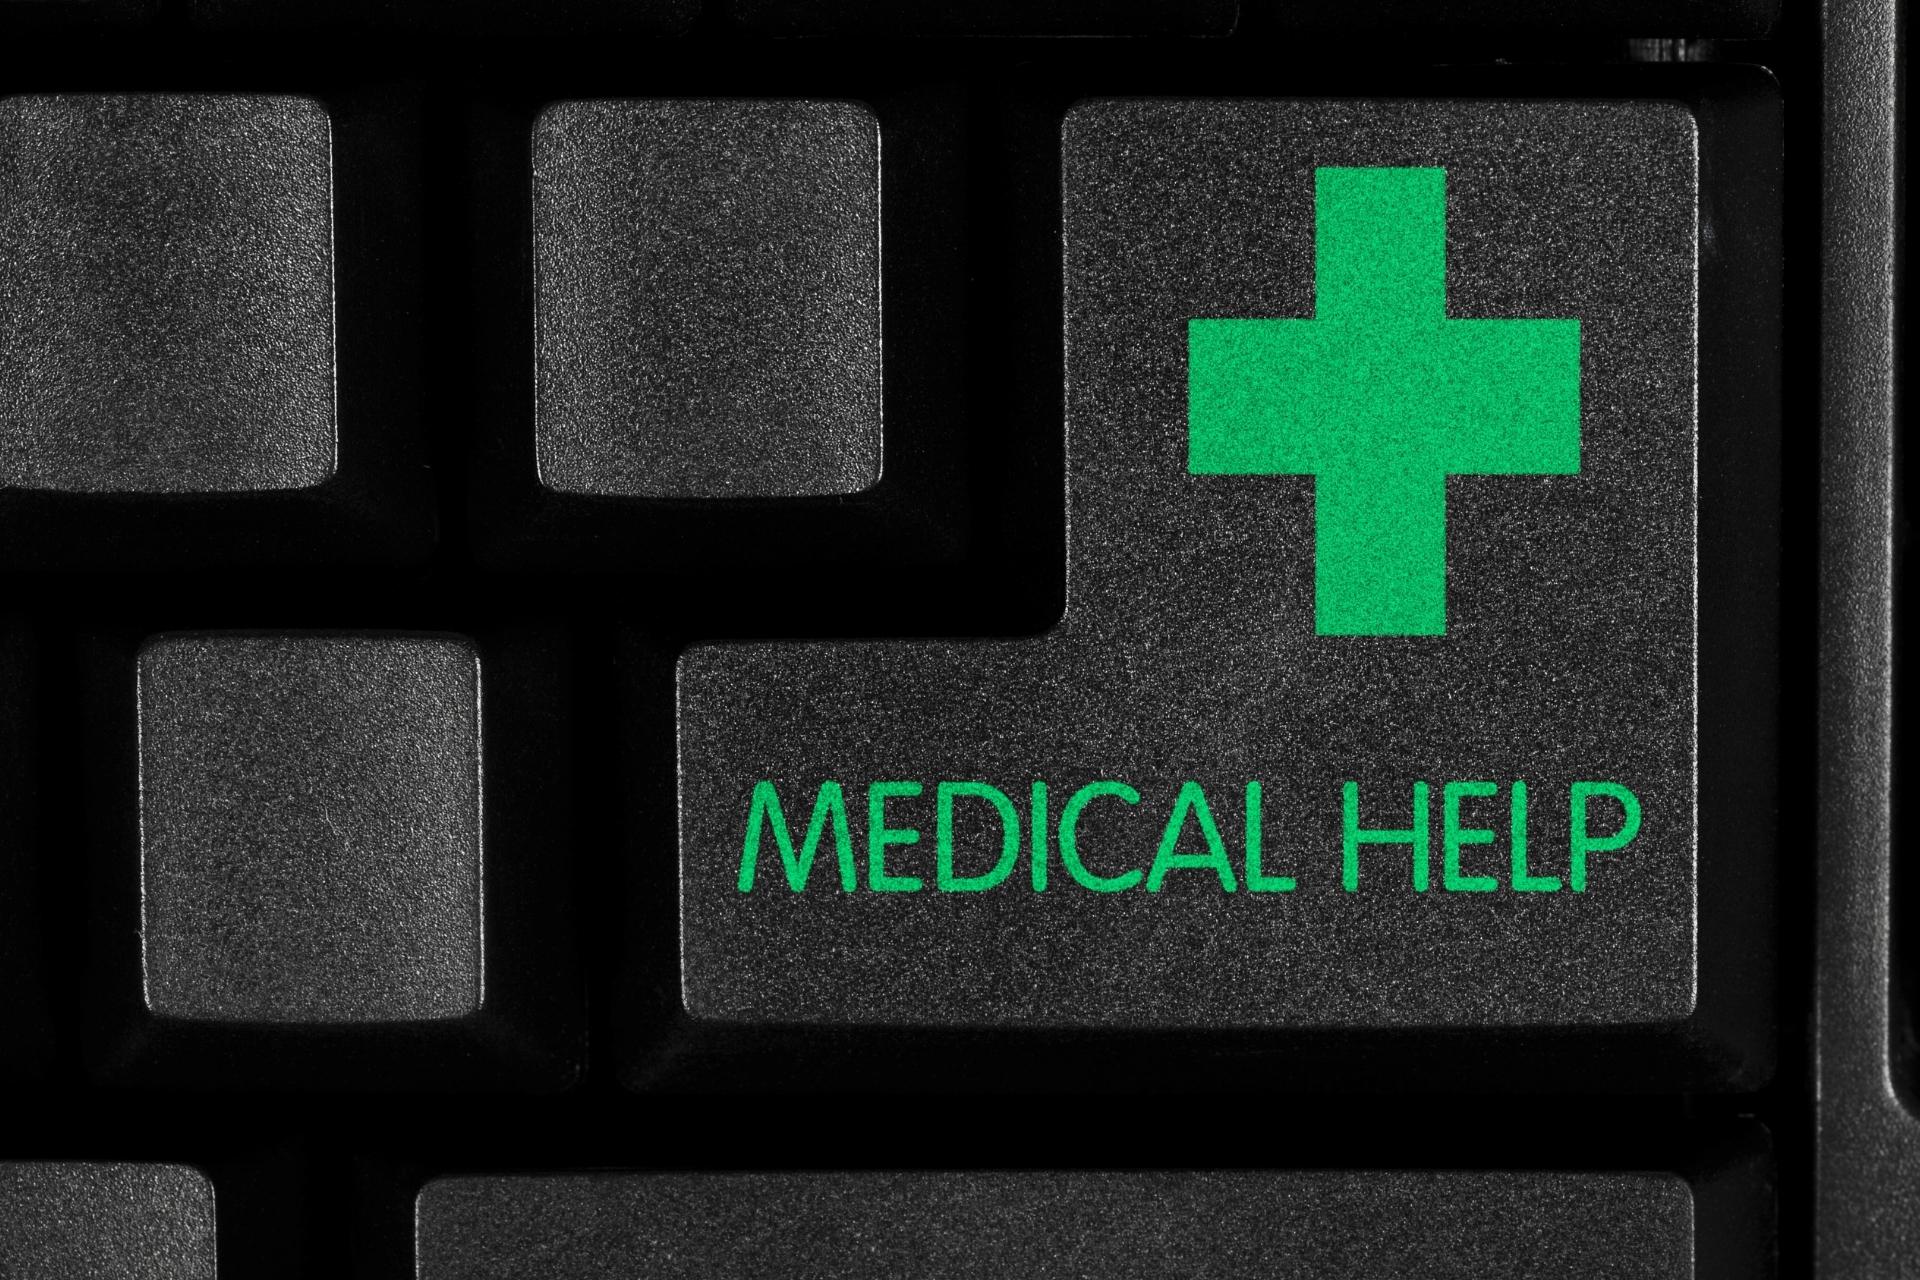 Keyboard key labeled “medical help” with green cross indicating medical marijuana/cannabis/hemp guidance.